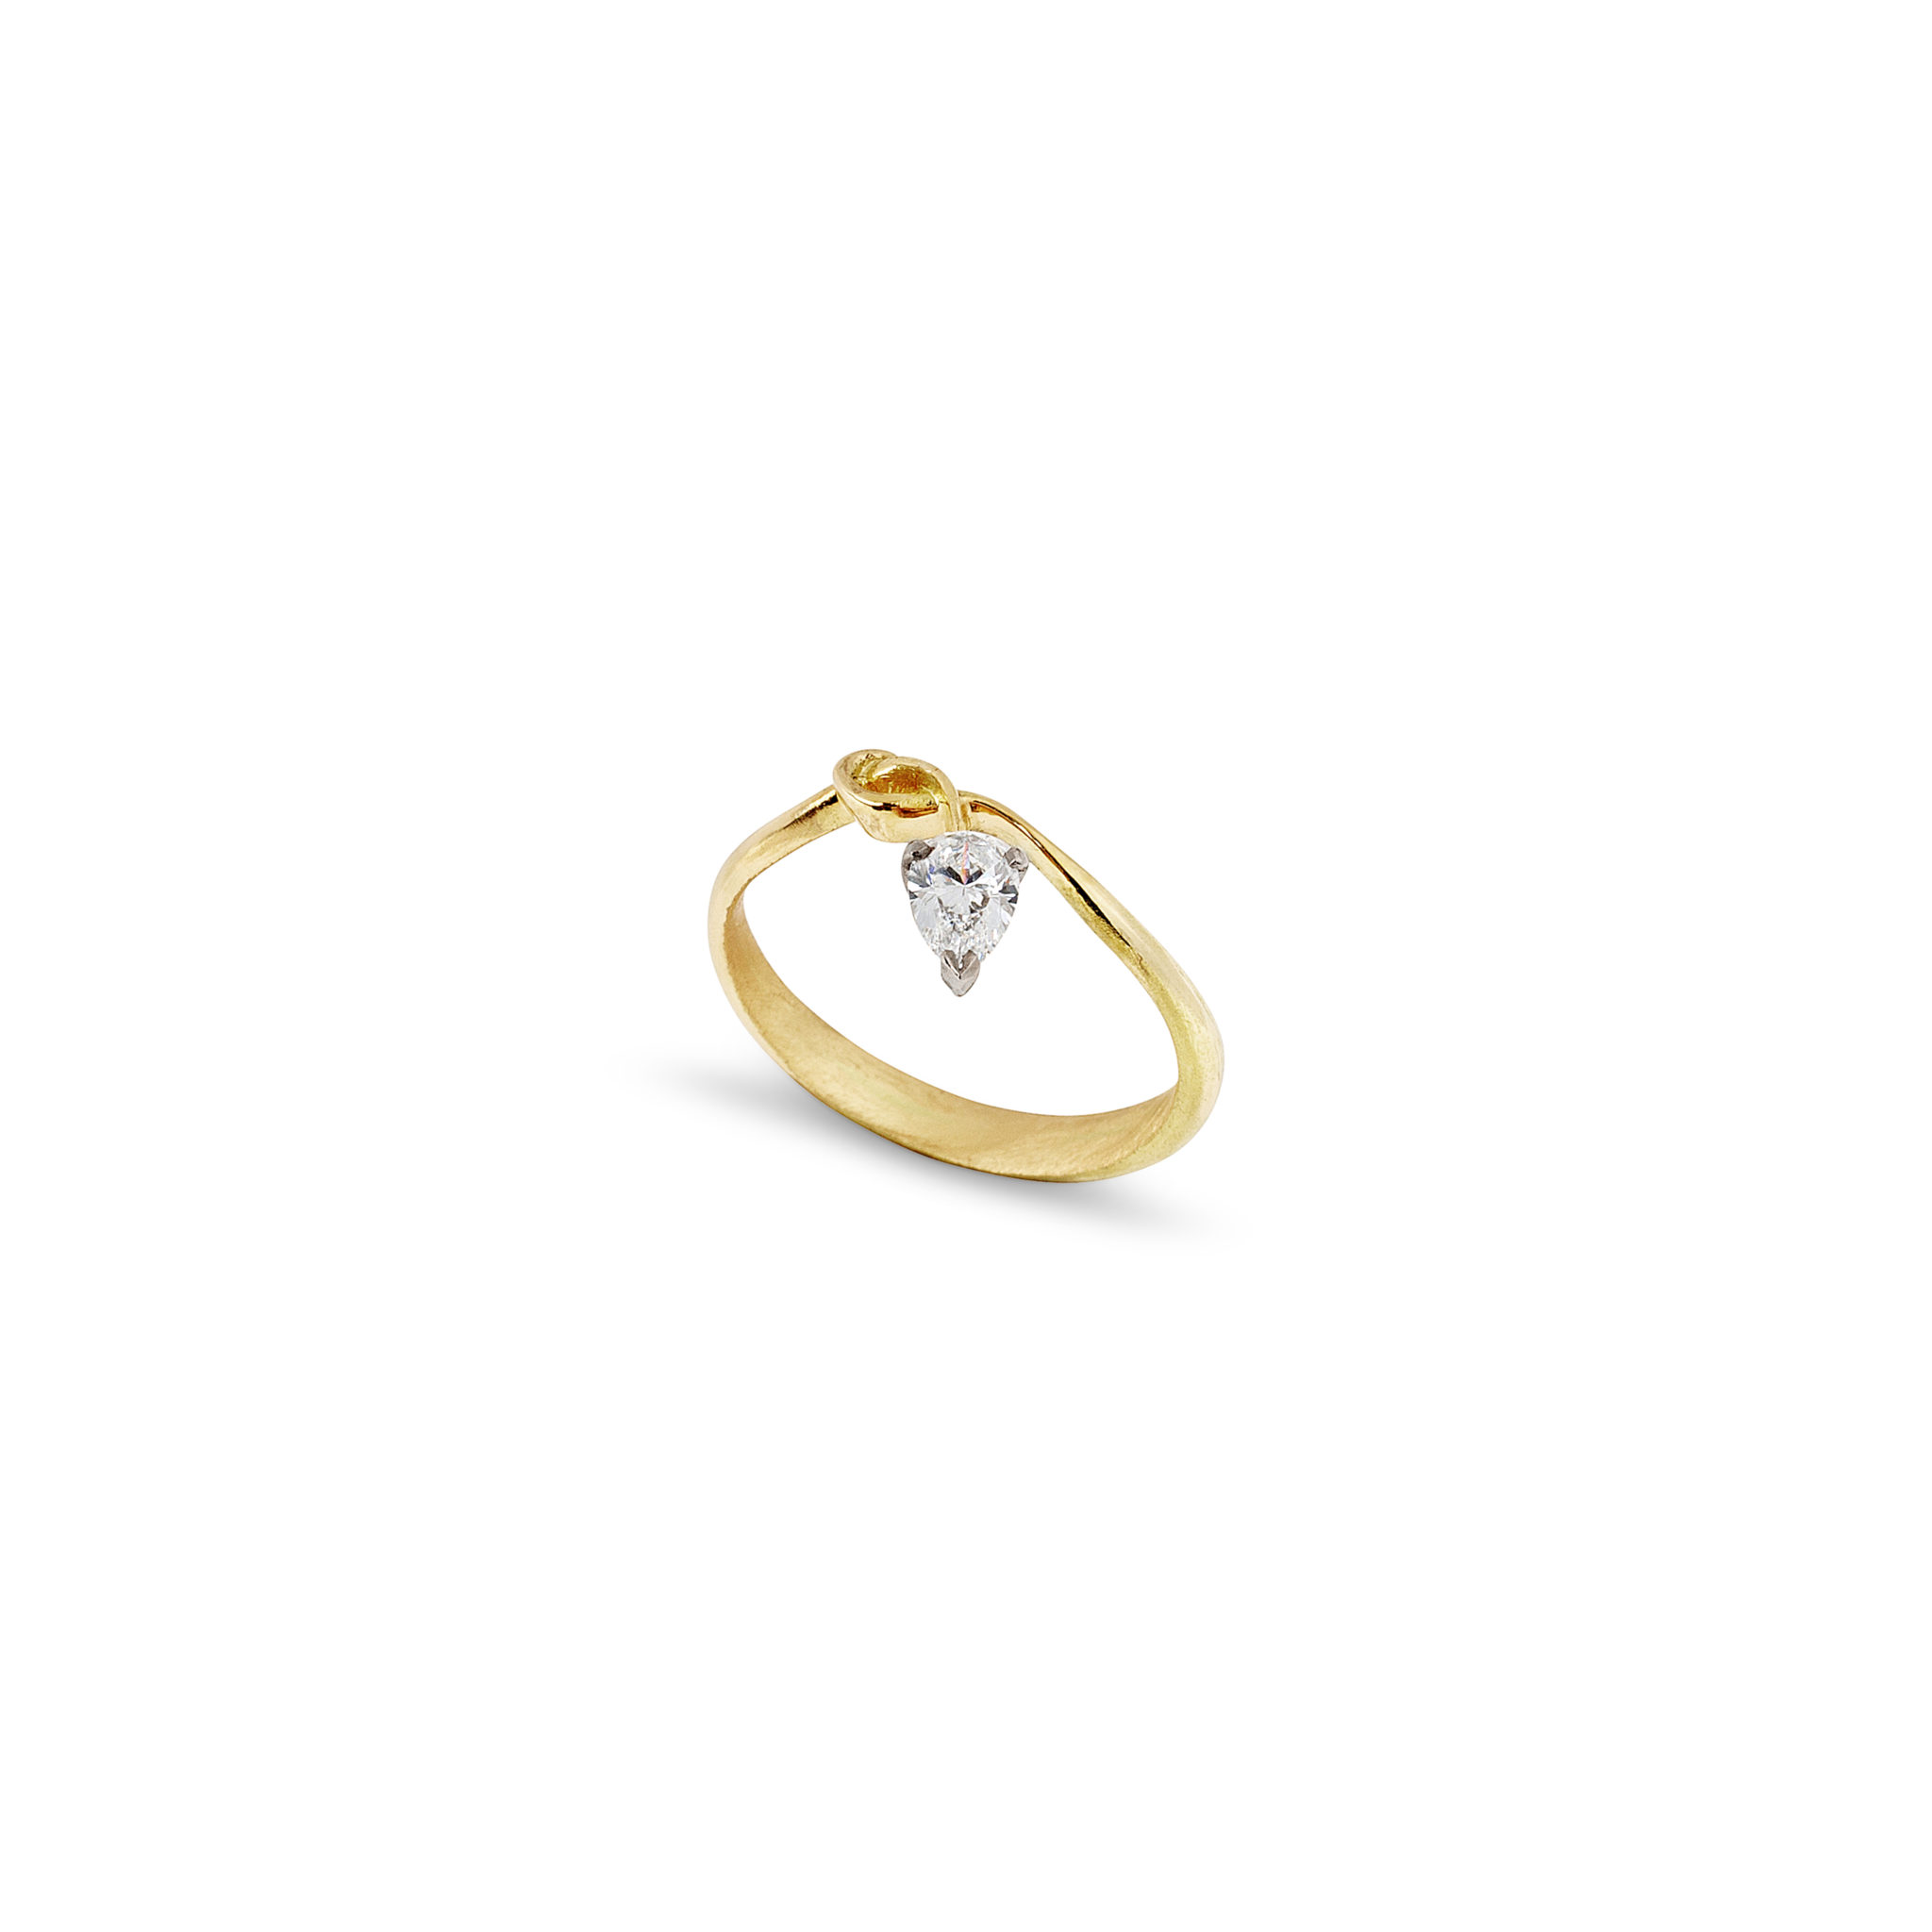 Jessie-Thomas-18ct-yellow-gold-diamond-ring-alternative-engagement